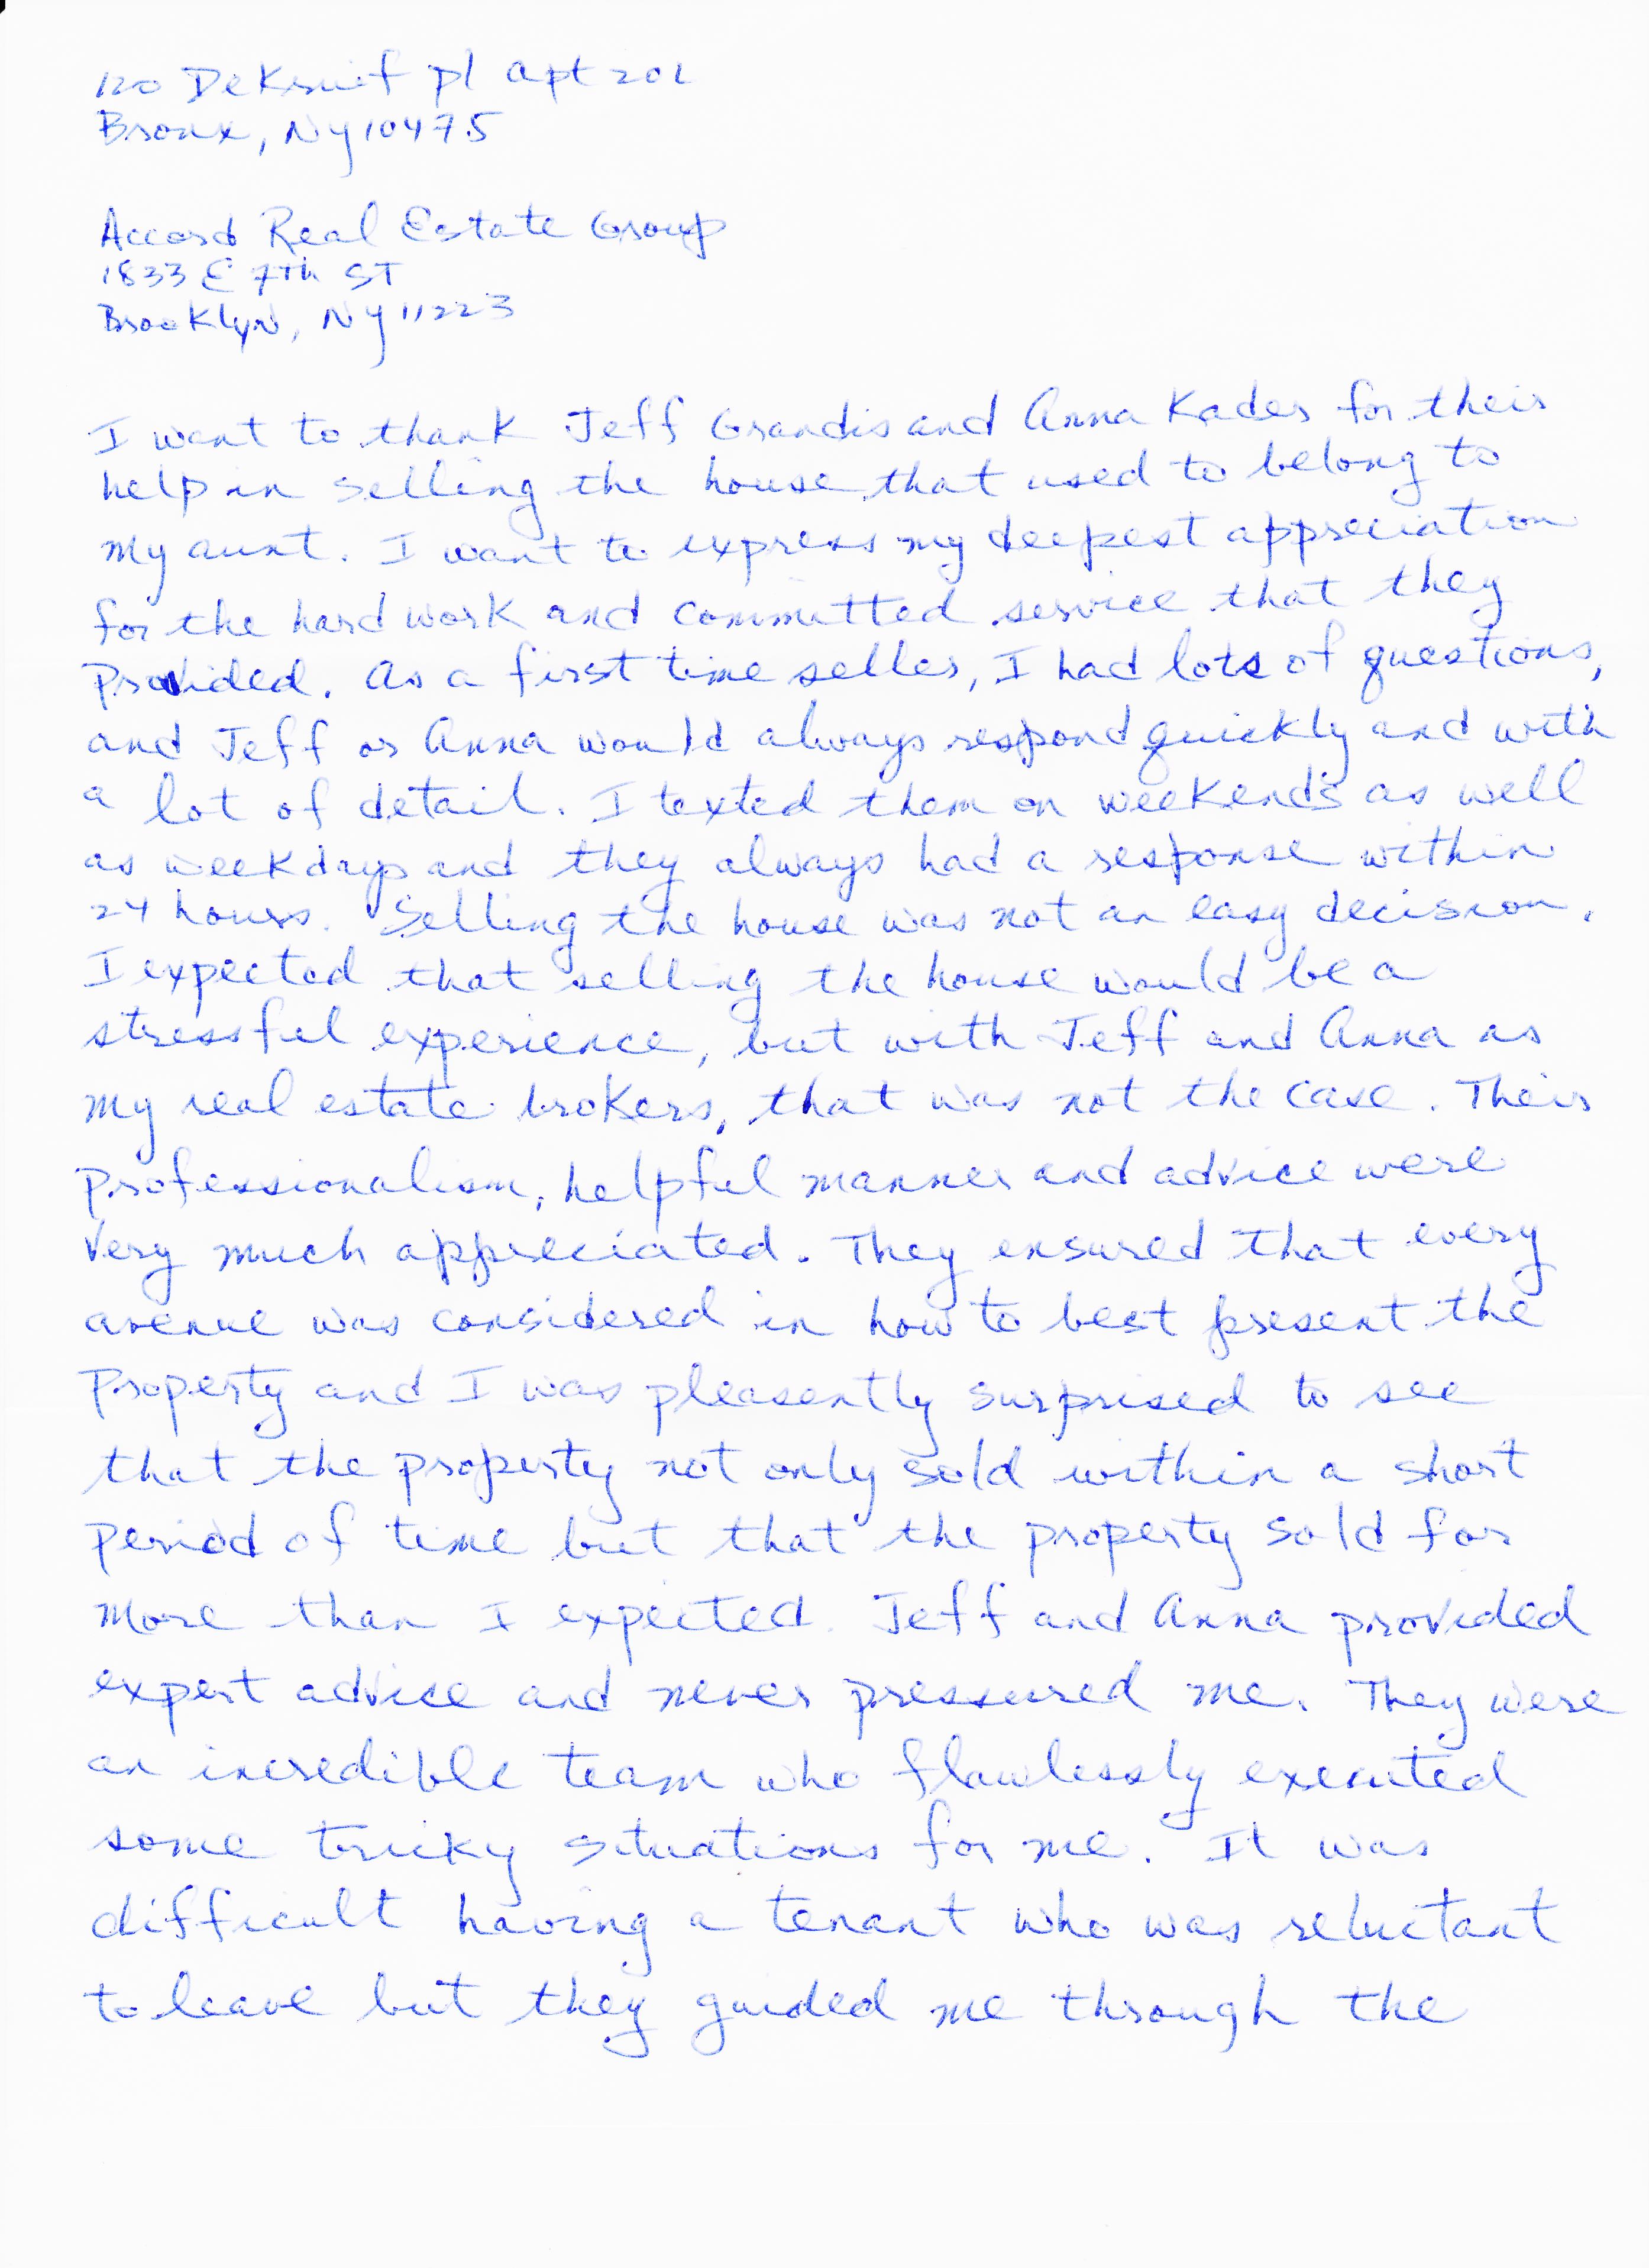 Testimonial Letter from Levinton- pg1of2